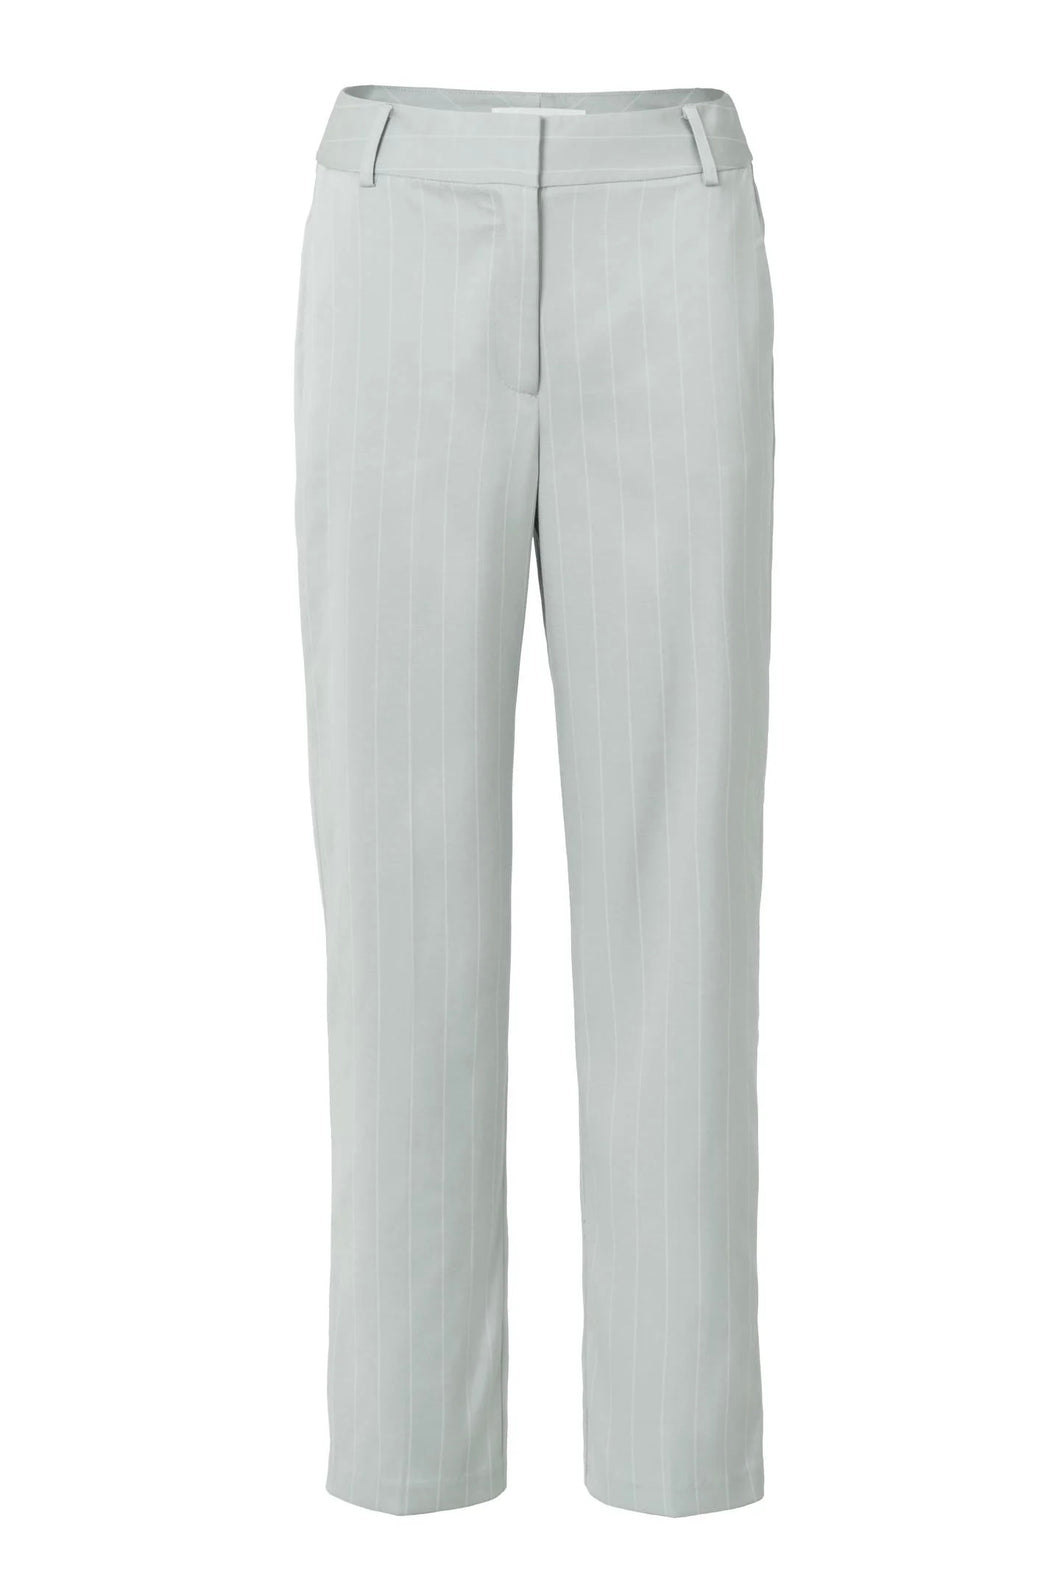 Yaya Loose Fit Striped Pantalon Northern Droplet Grey Dessin 01-301072-307